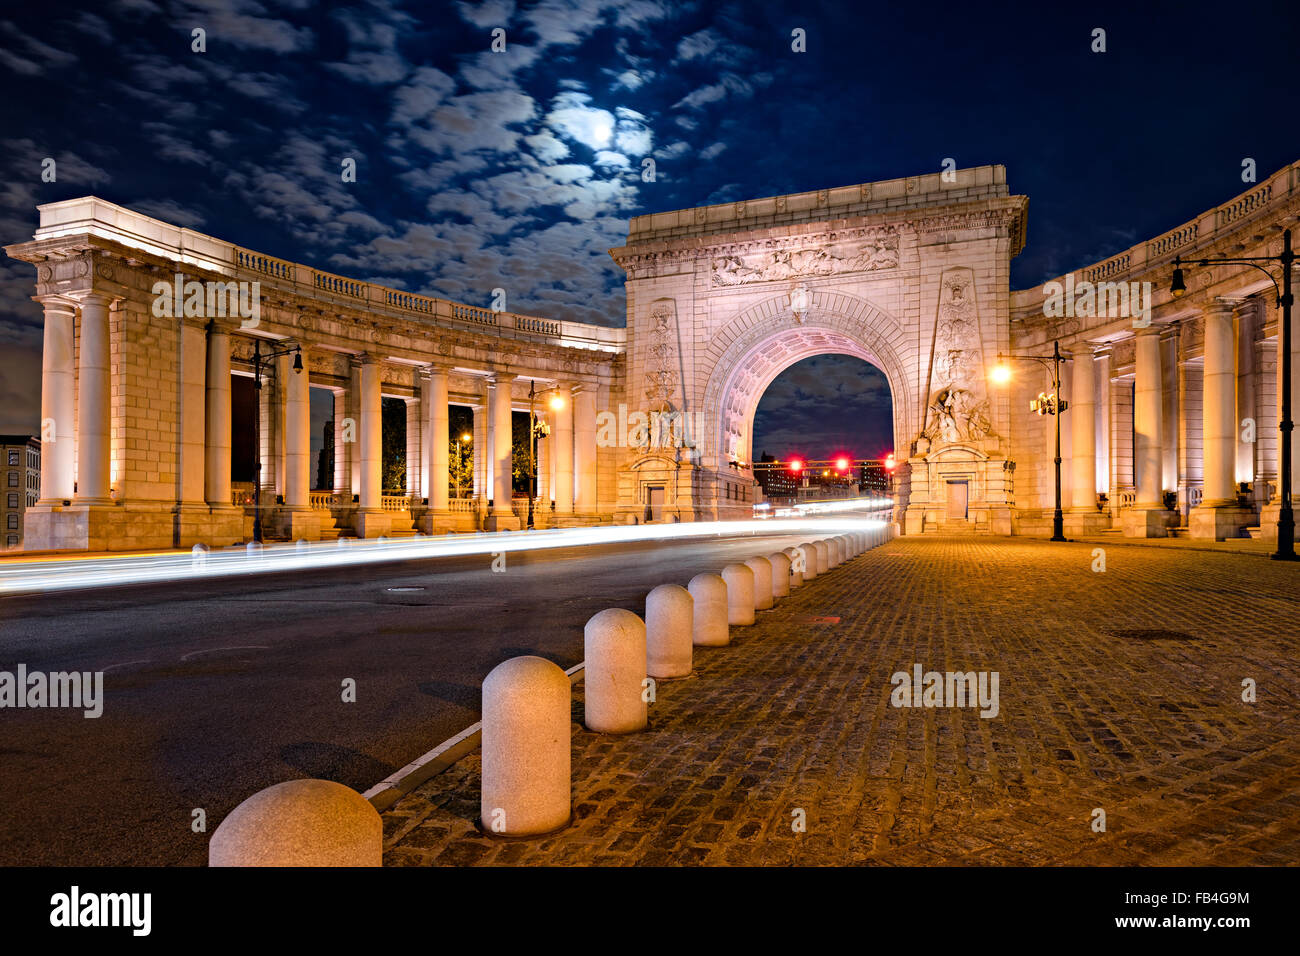 Illuminated Triumphal Arch and Colonnade of Manhattan Bridge Entrance in moonlight, Chinatown, Lower Manhattan, New York City. Stock Photo